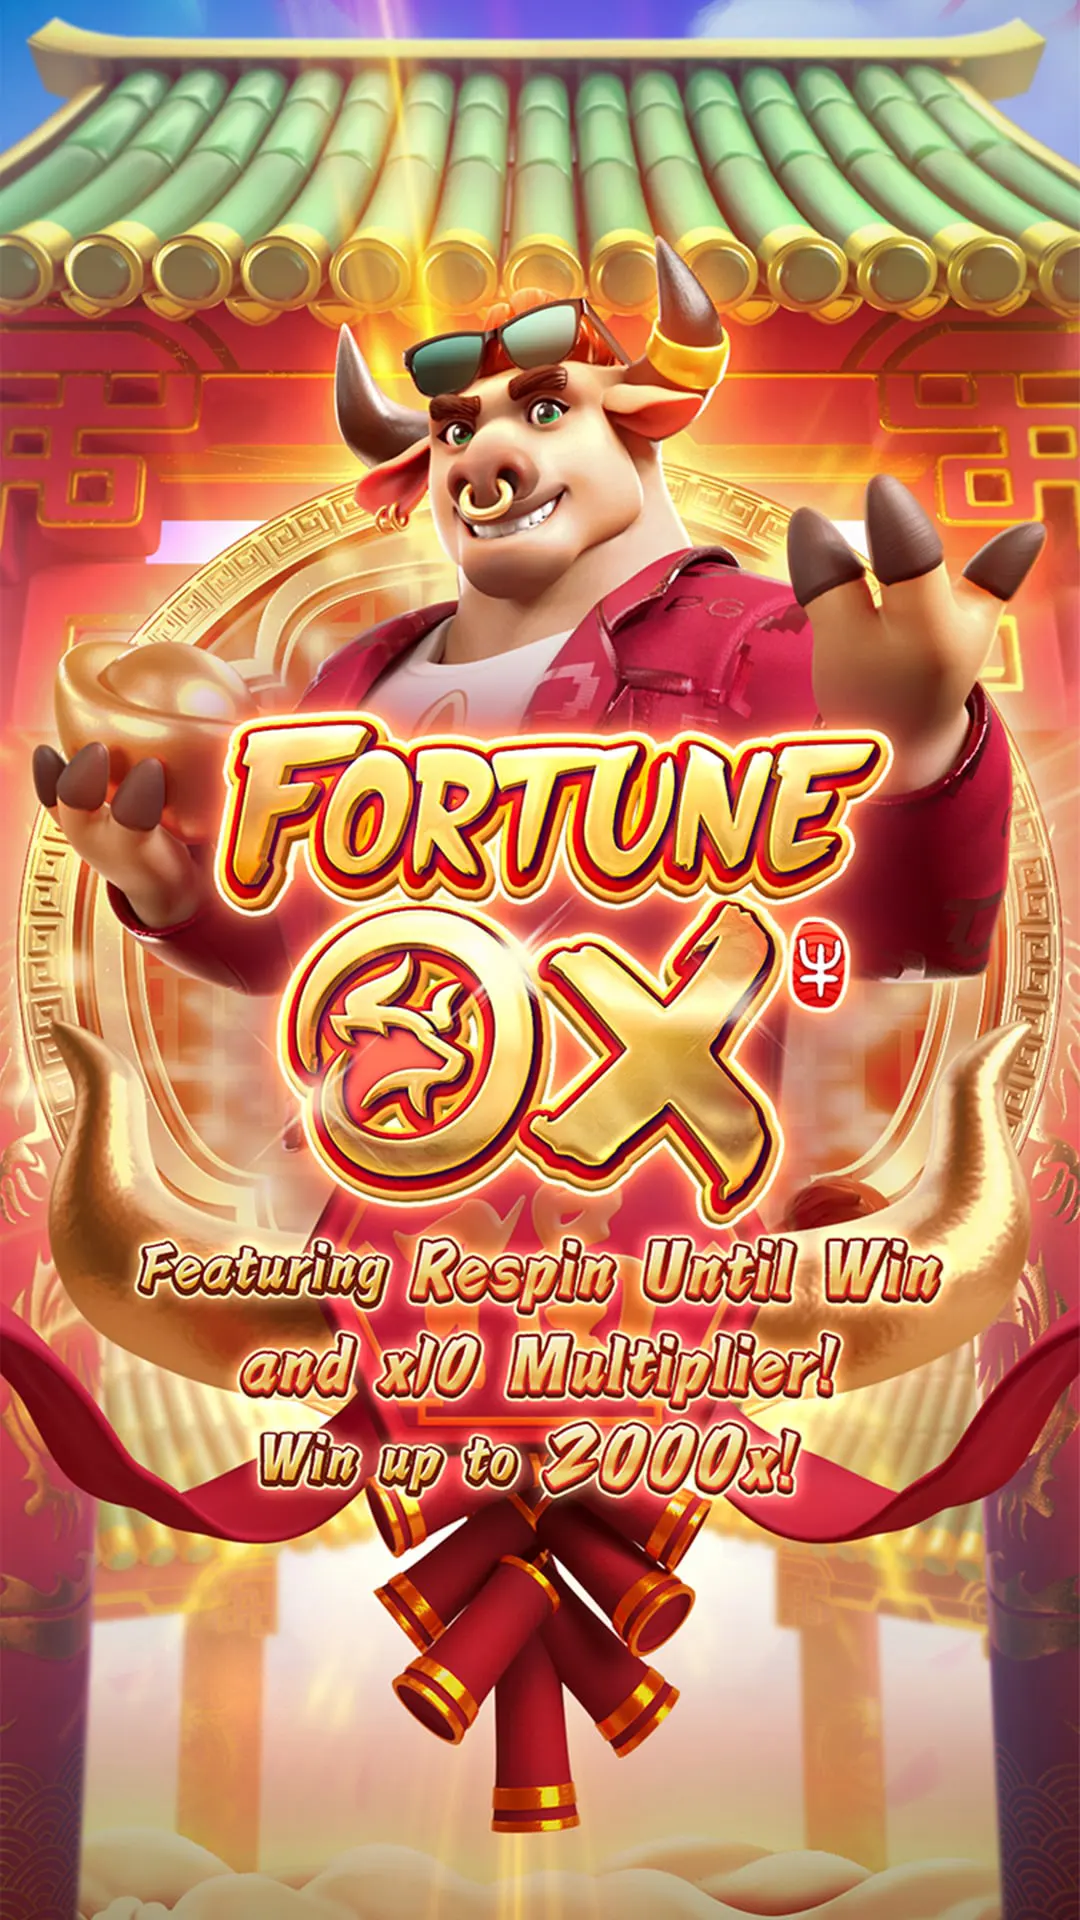 fortune ox